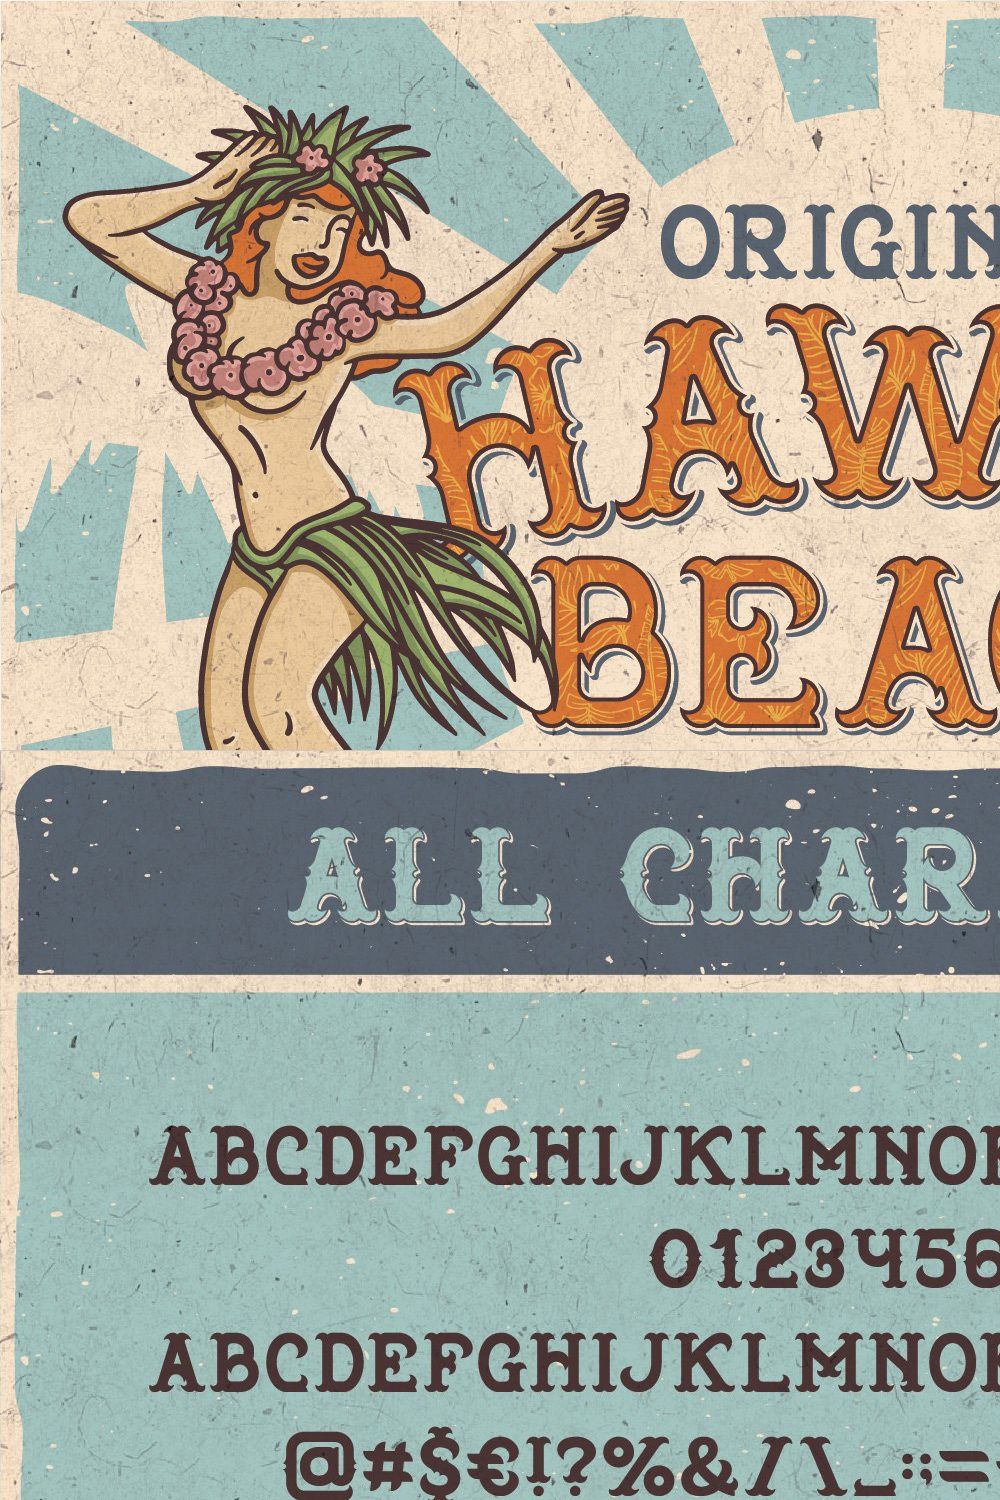 Hawaii Beach. Font & T-shirts pinterest preview image.